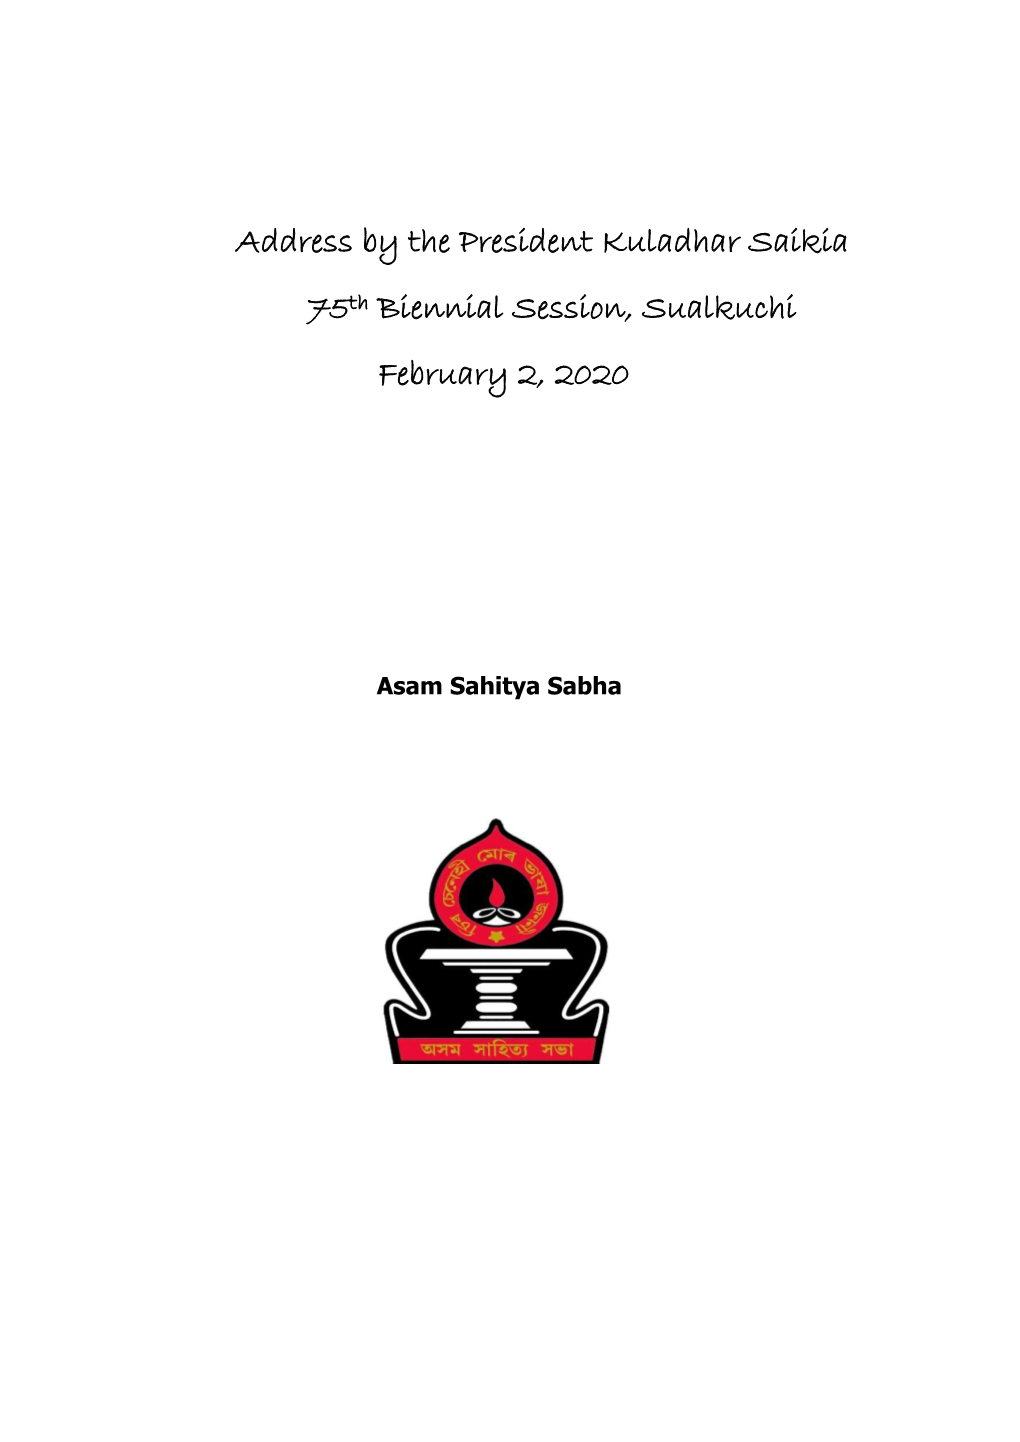 Address by the President Kuladhar Saikia 75Th Biennial Session, Sualkuchi